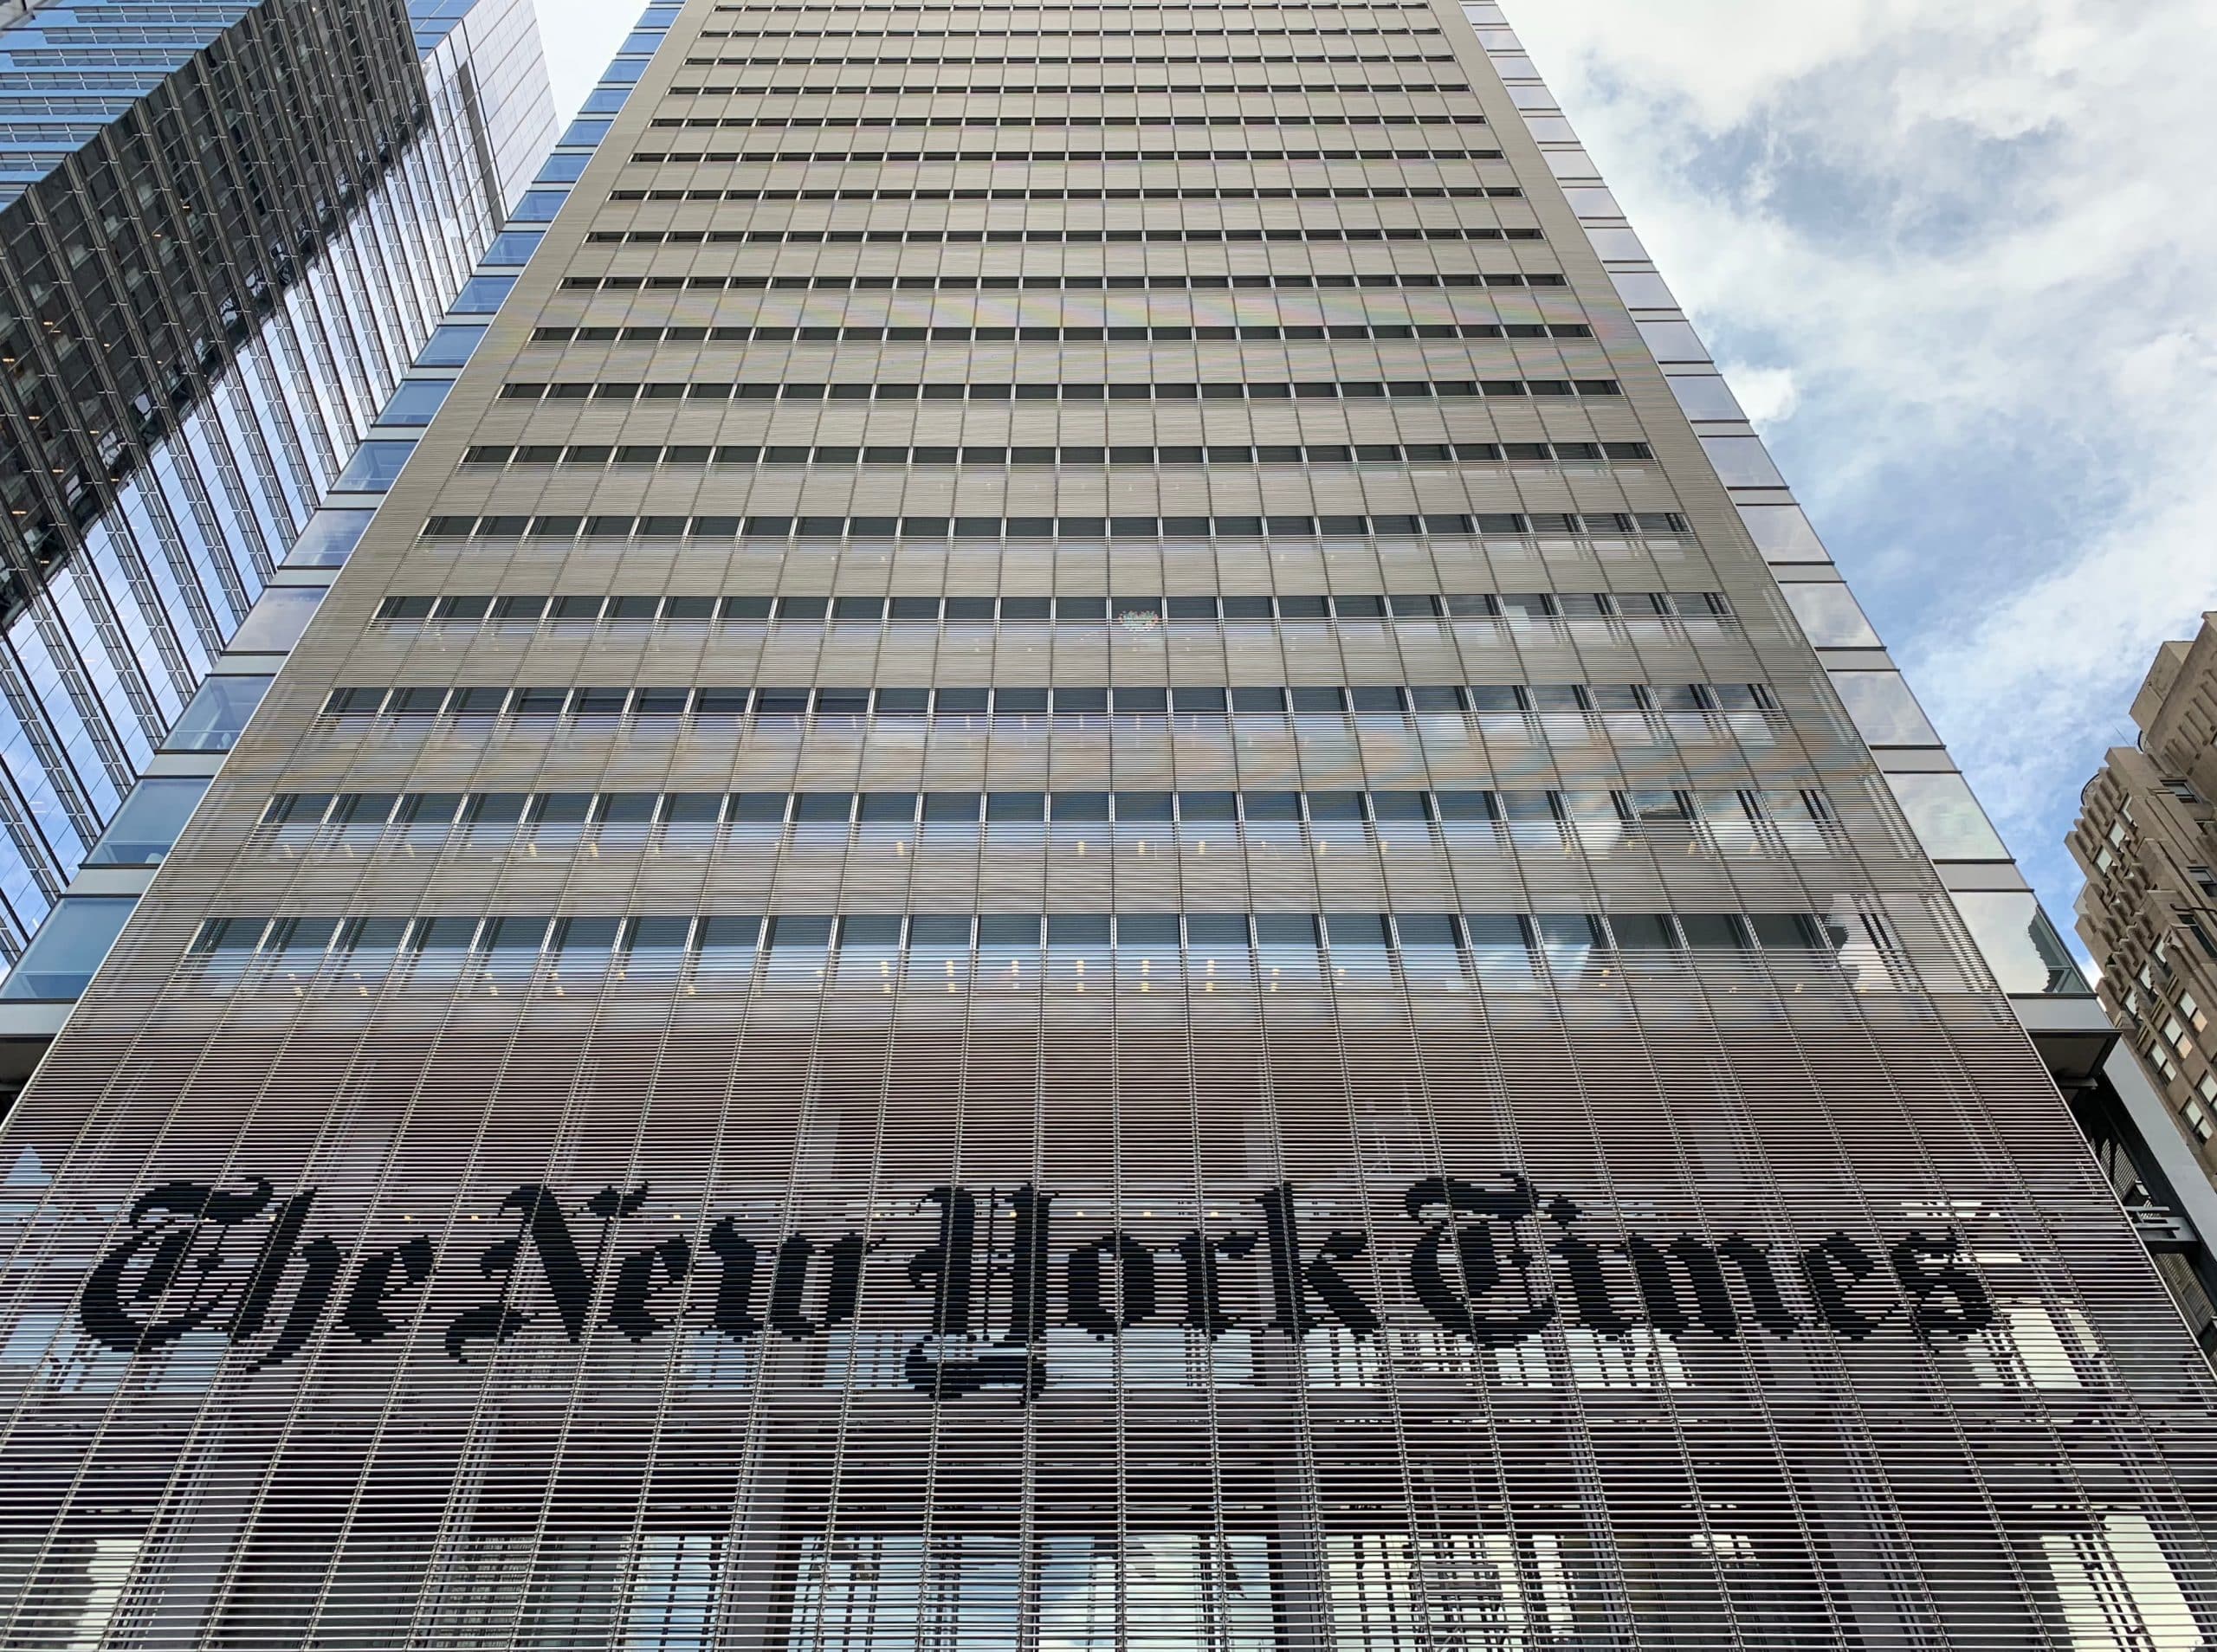 The New York Times blockchain